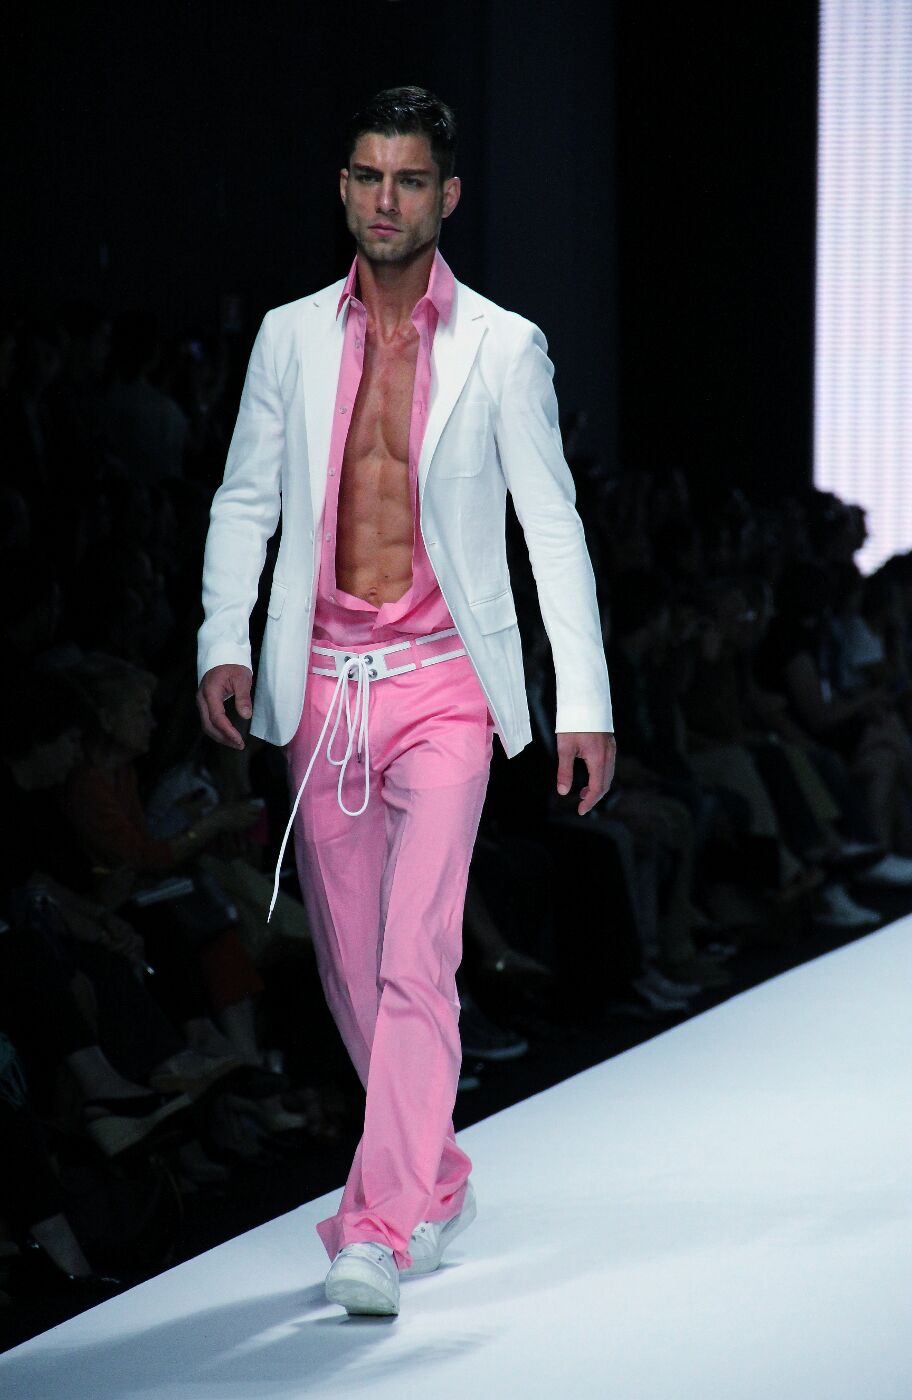 dirk-bikkembergs-sport-couture-milano-fashion-week-2012-spring-summer-fashion-show-catwalk